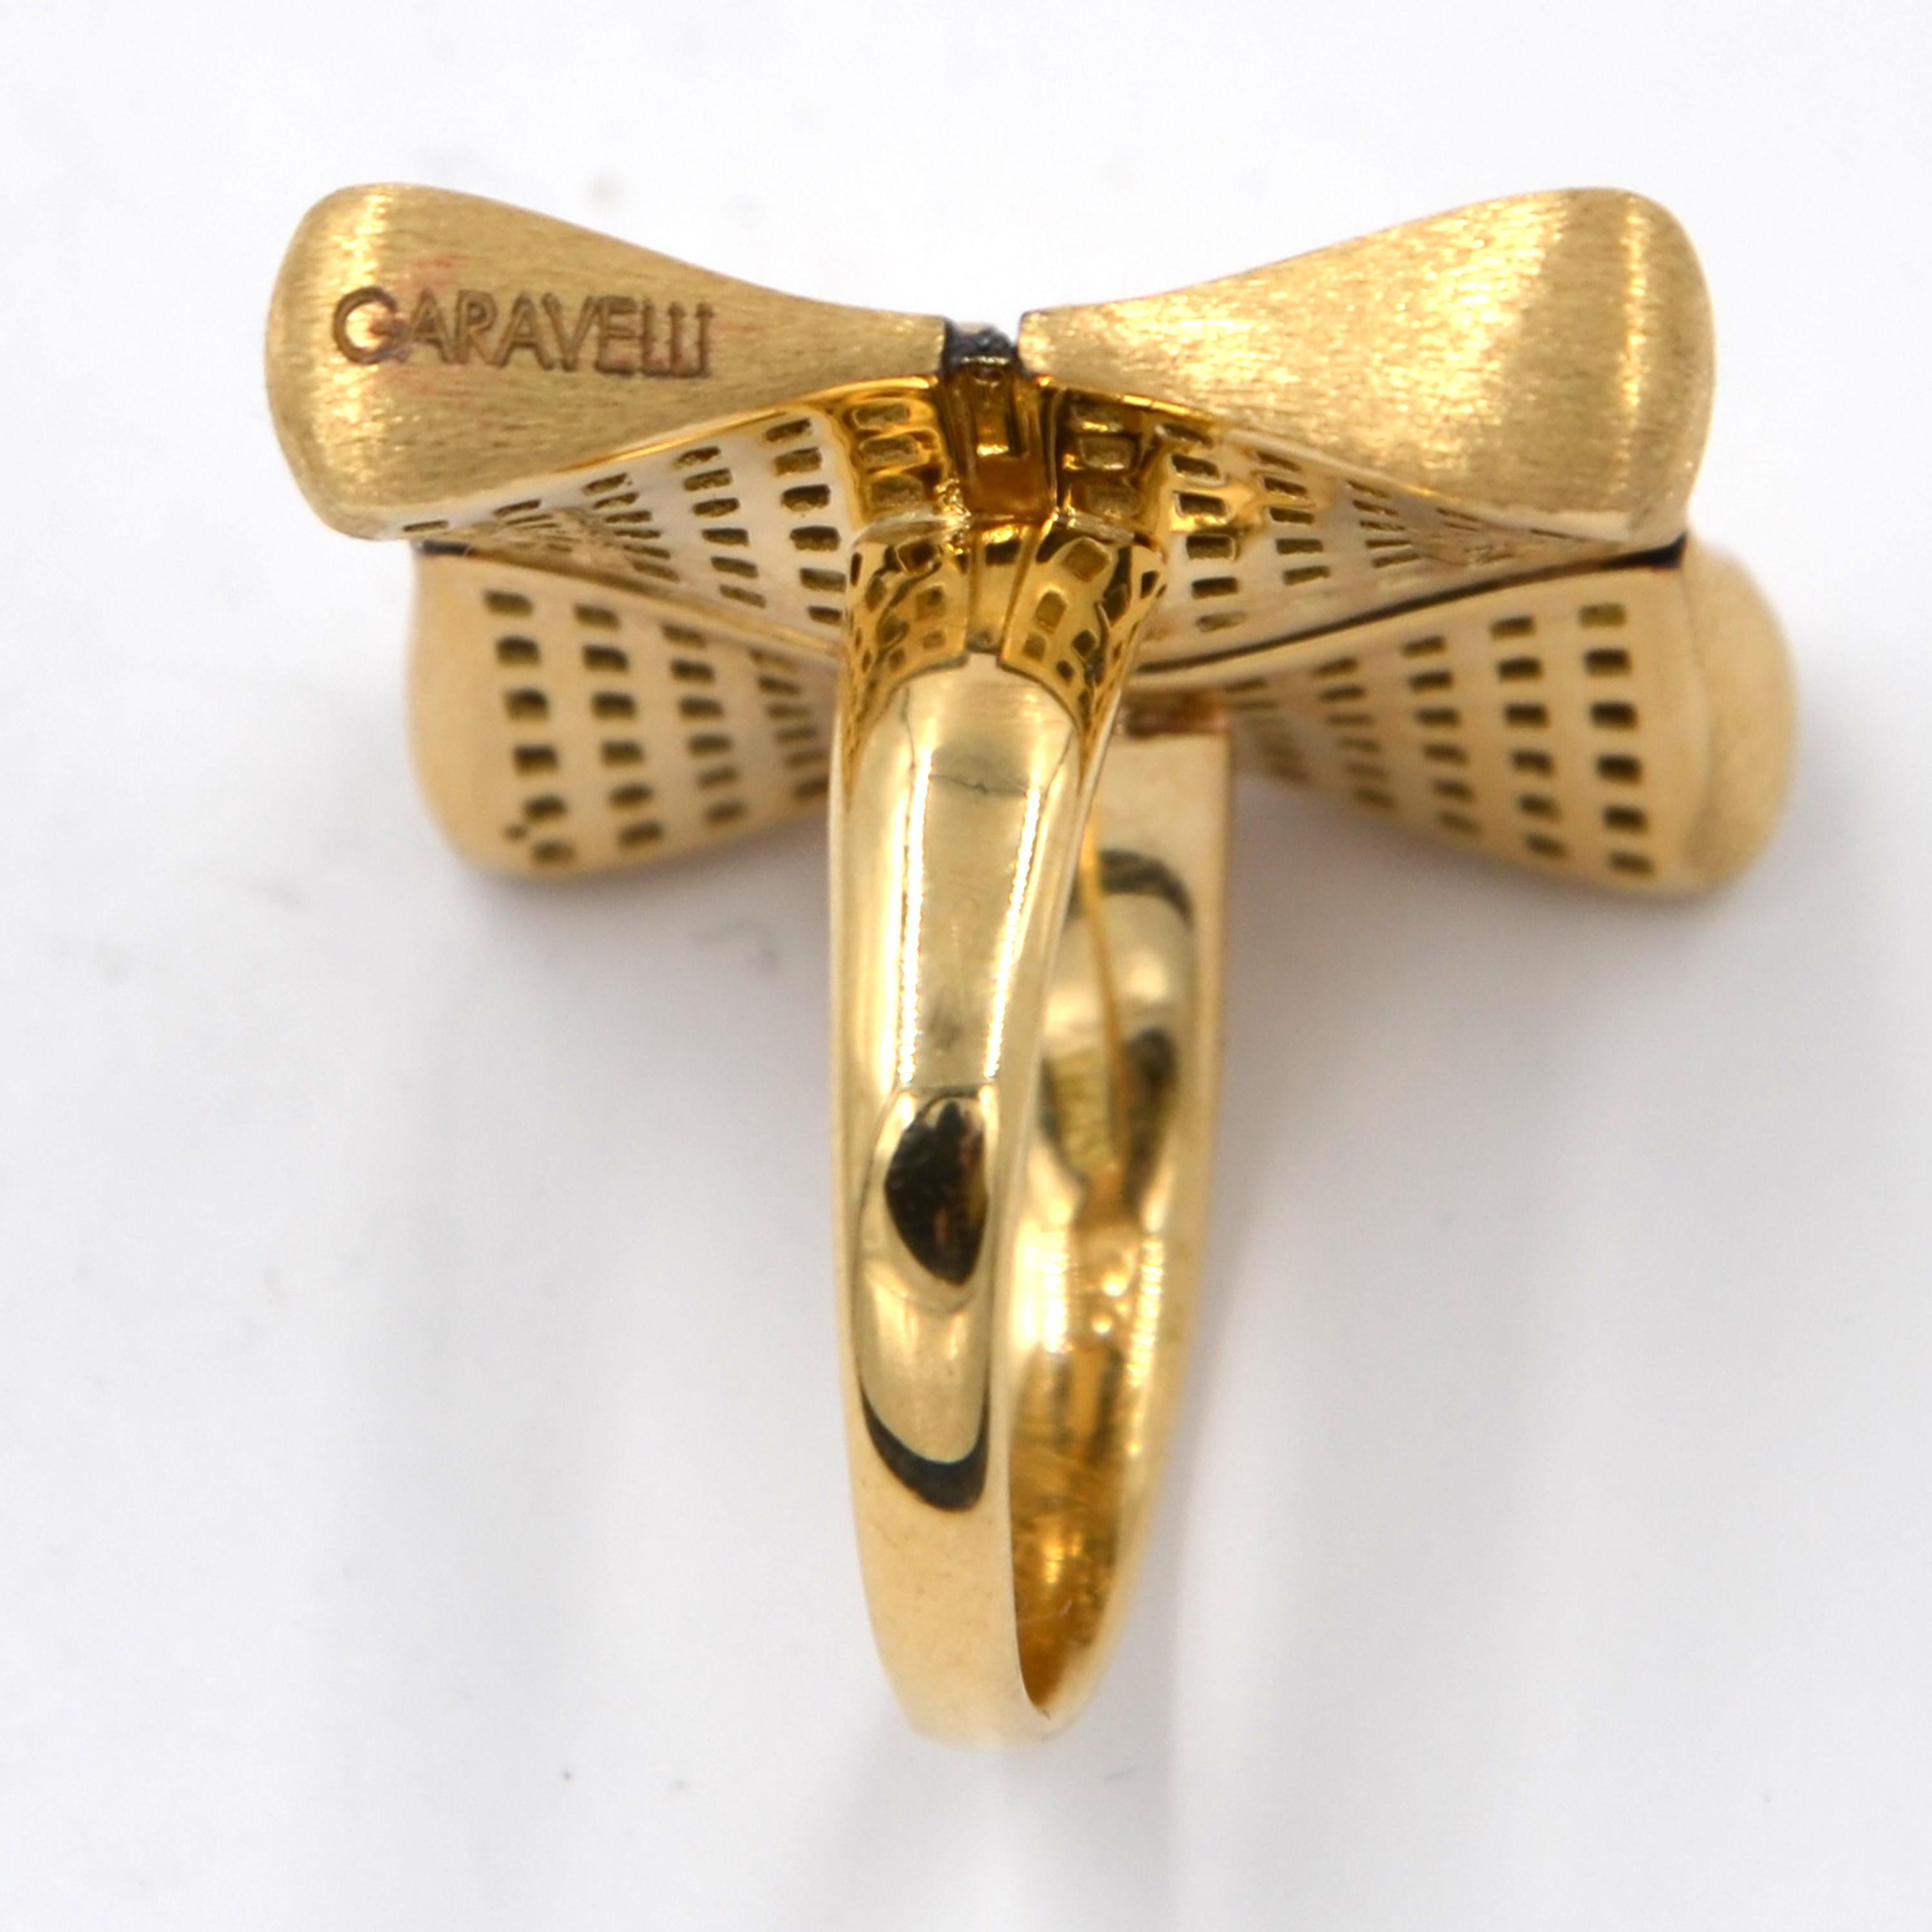 Contemporary Garavelli 18 Karat Rose Gold White Diamonds Award Collection Ring